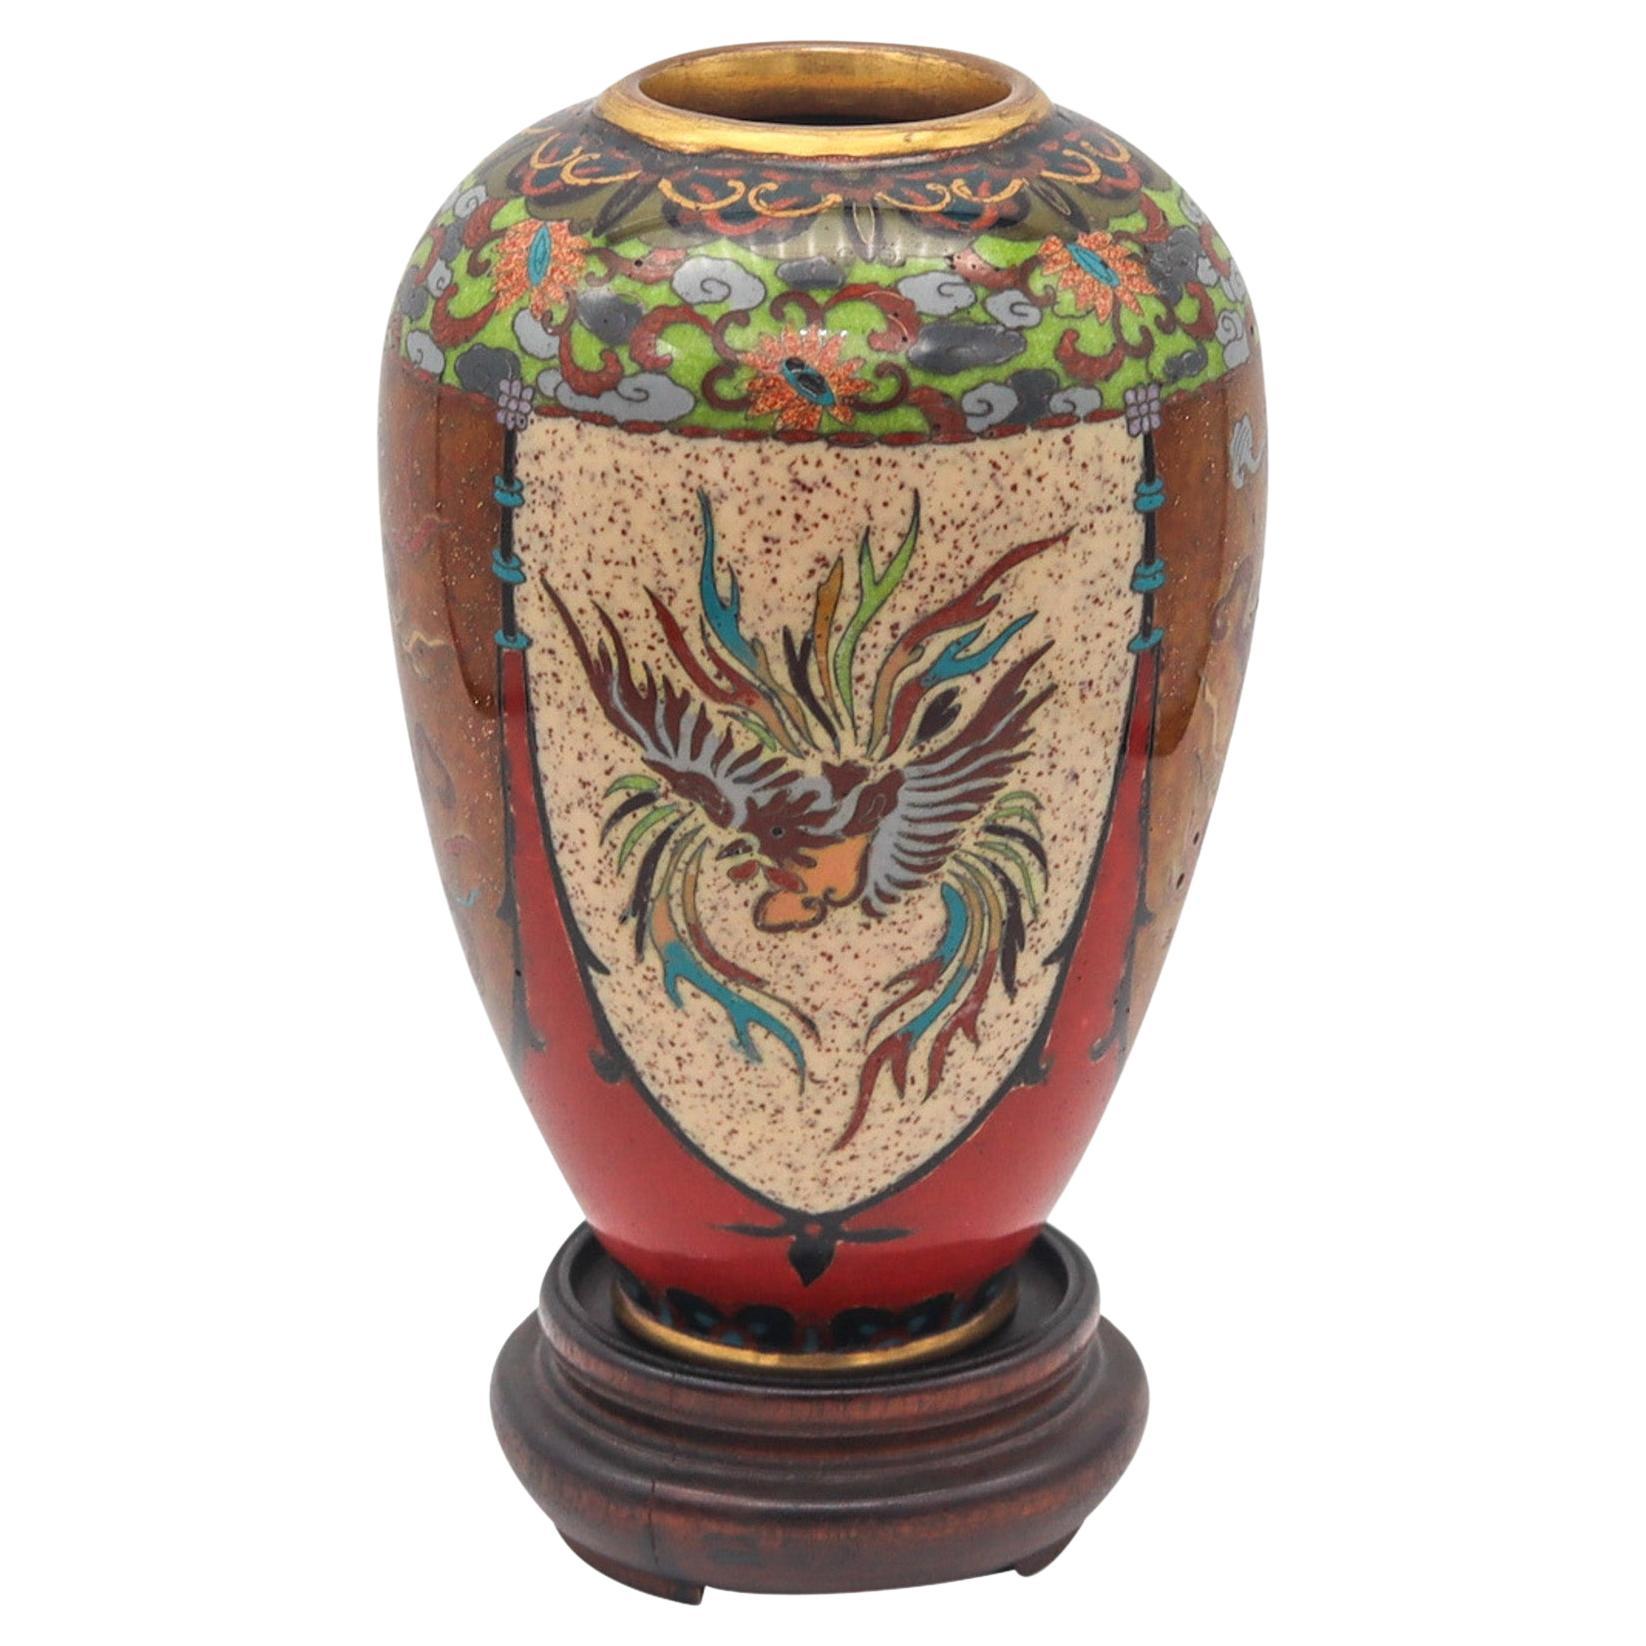 Japan 1890 Meiji Period Decorative Vase In Cloisonné Enamel With Wood Base For Sale